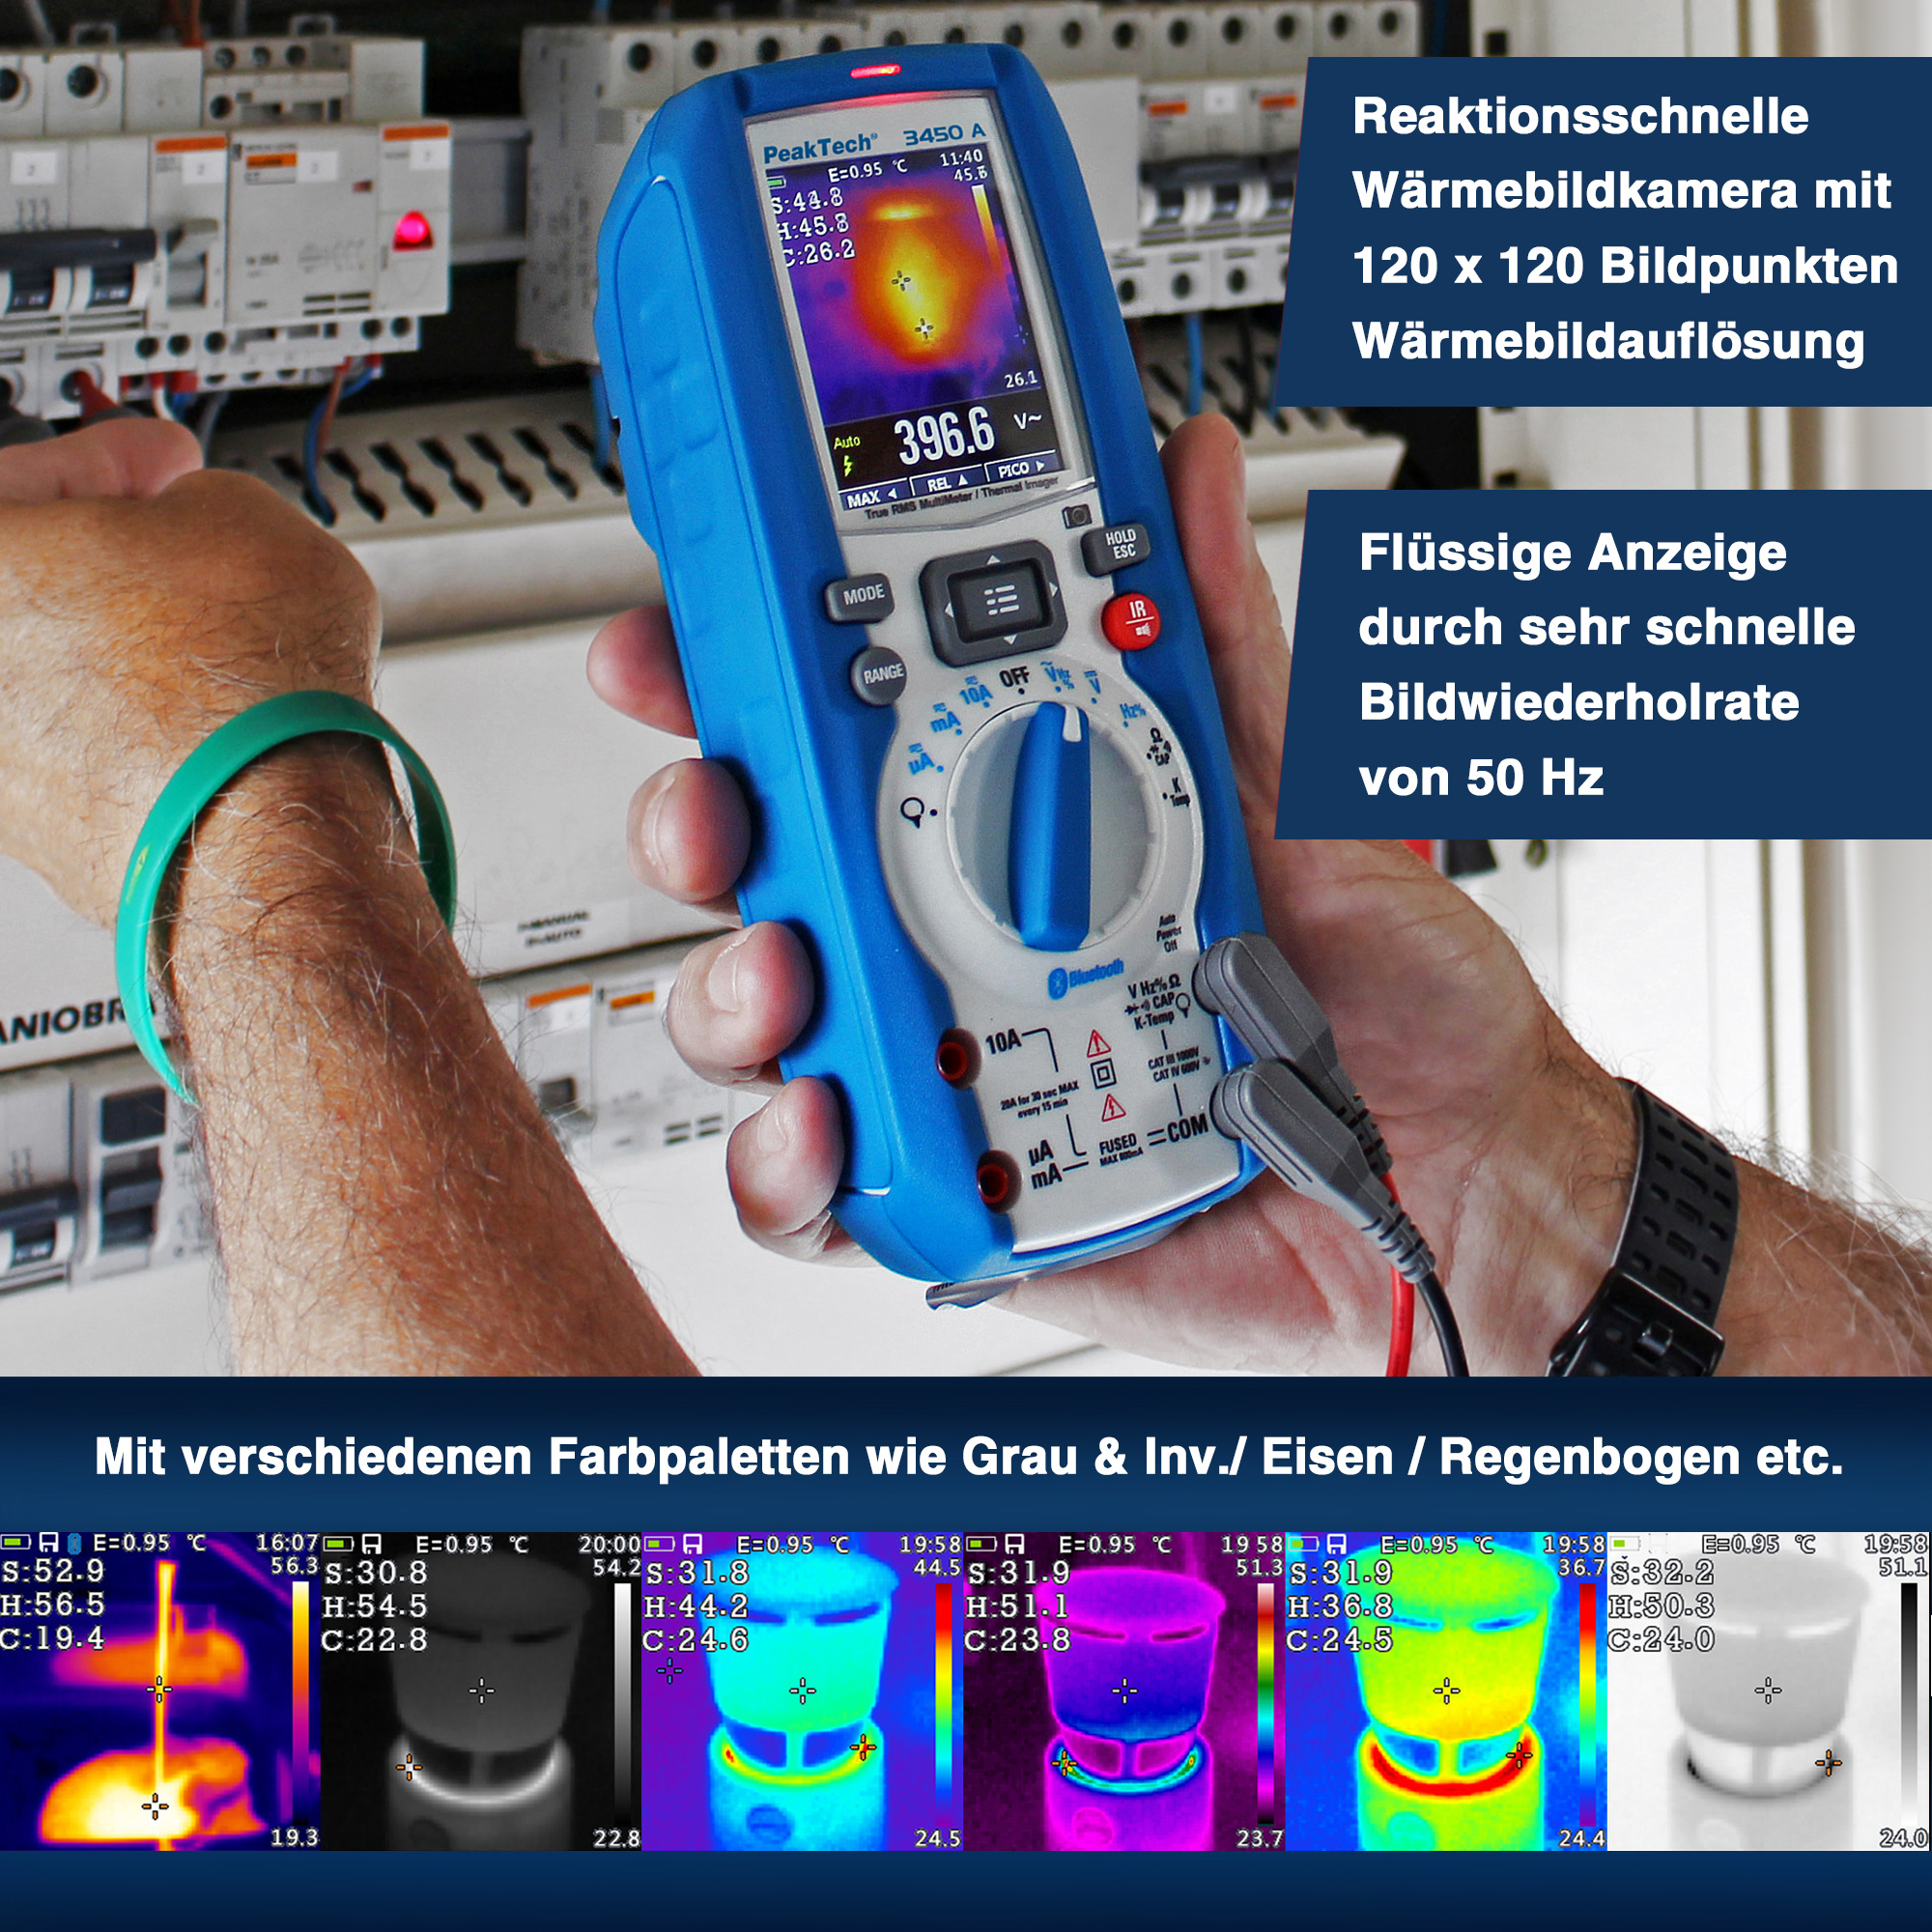 «PeakTech® P 3450 A» TrueRMS multimeter & thermal imaging camera